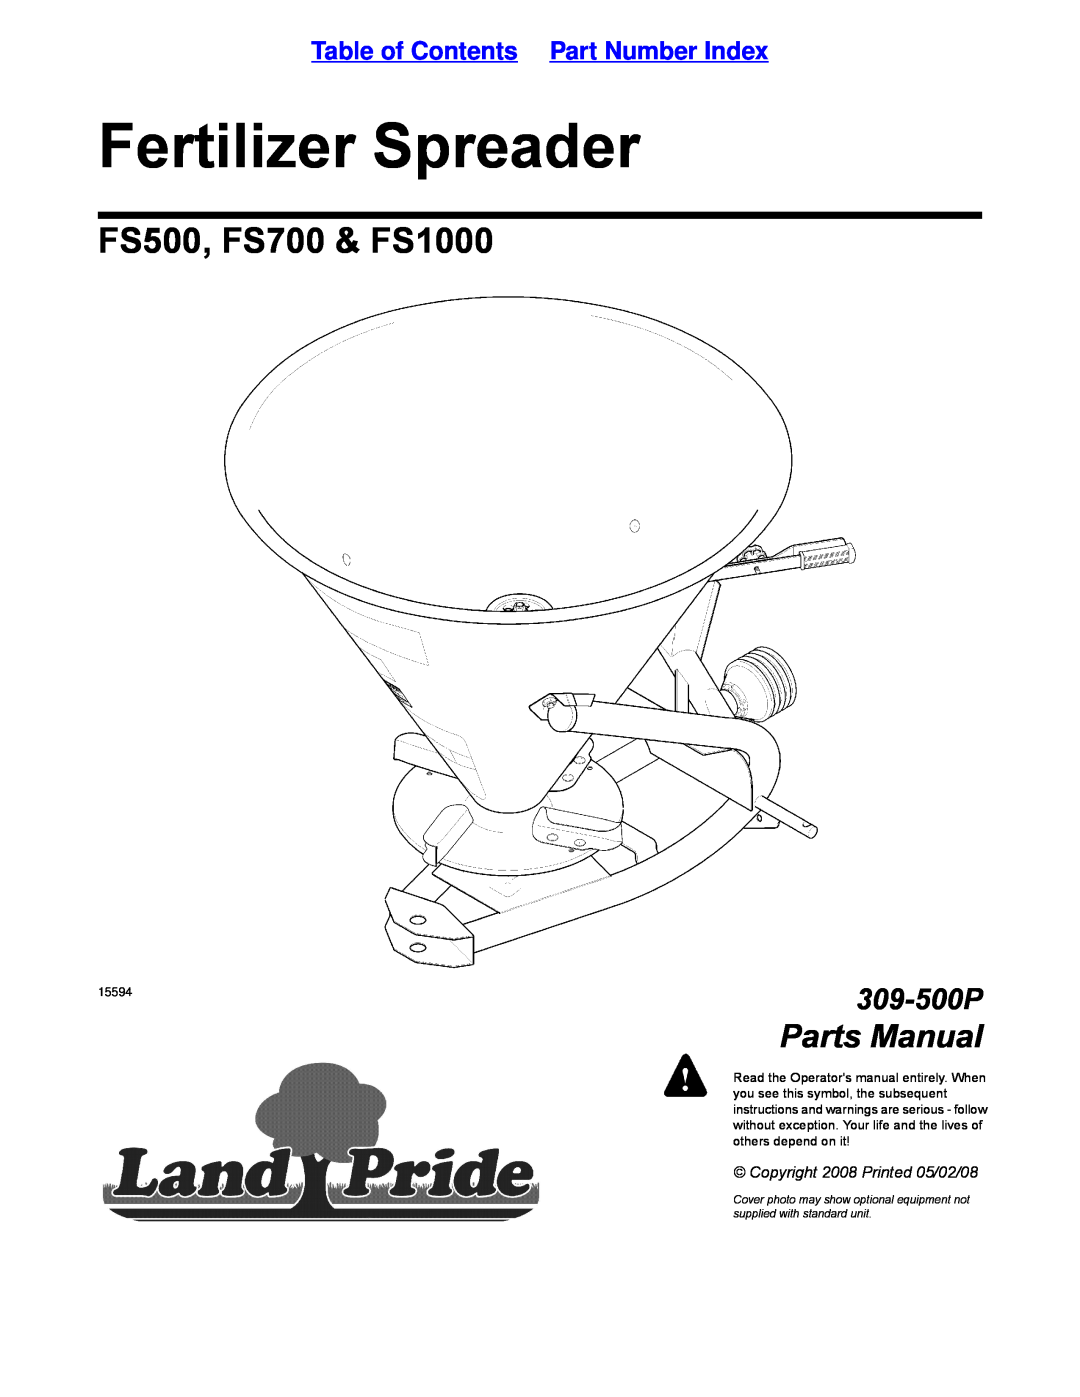 Land Pride manual Table of Contents Part Number Index, Fertilizer Spreader, FS500, FS700 & FS1000, Parts Manual 